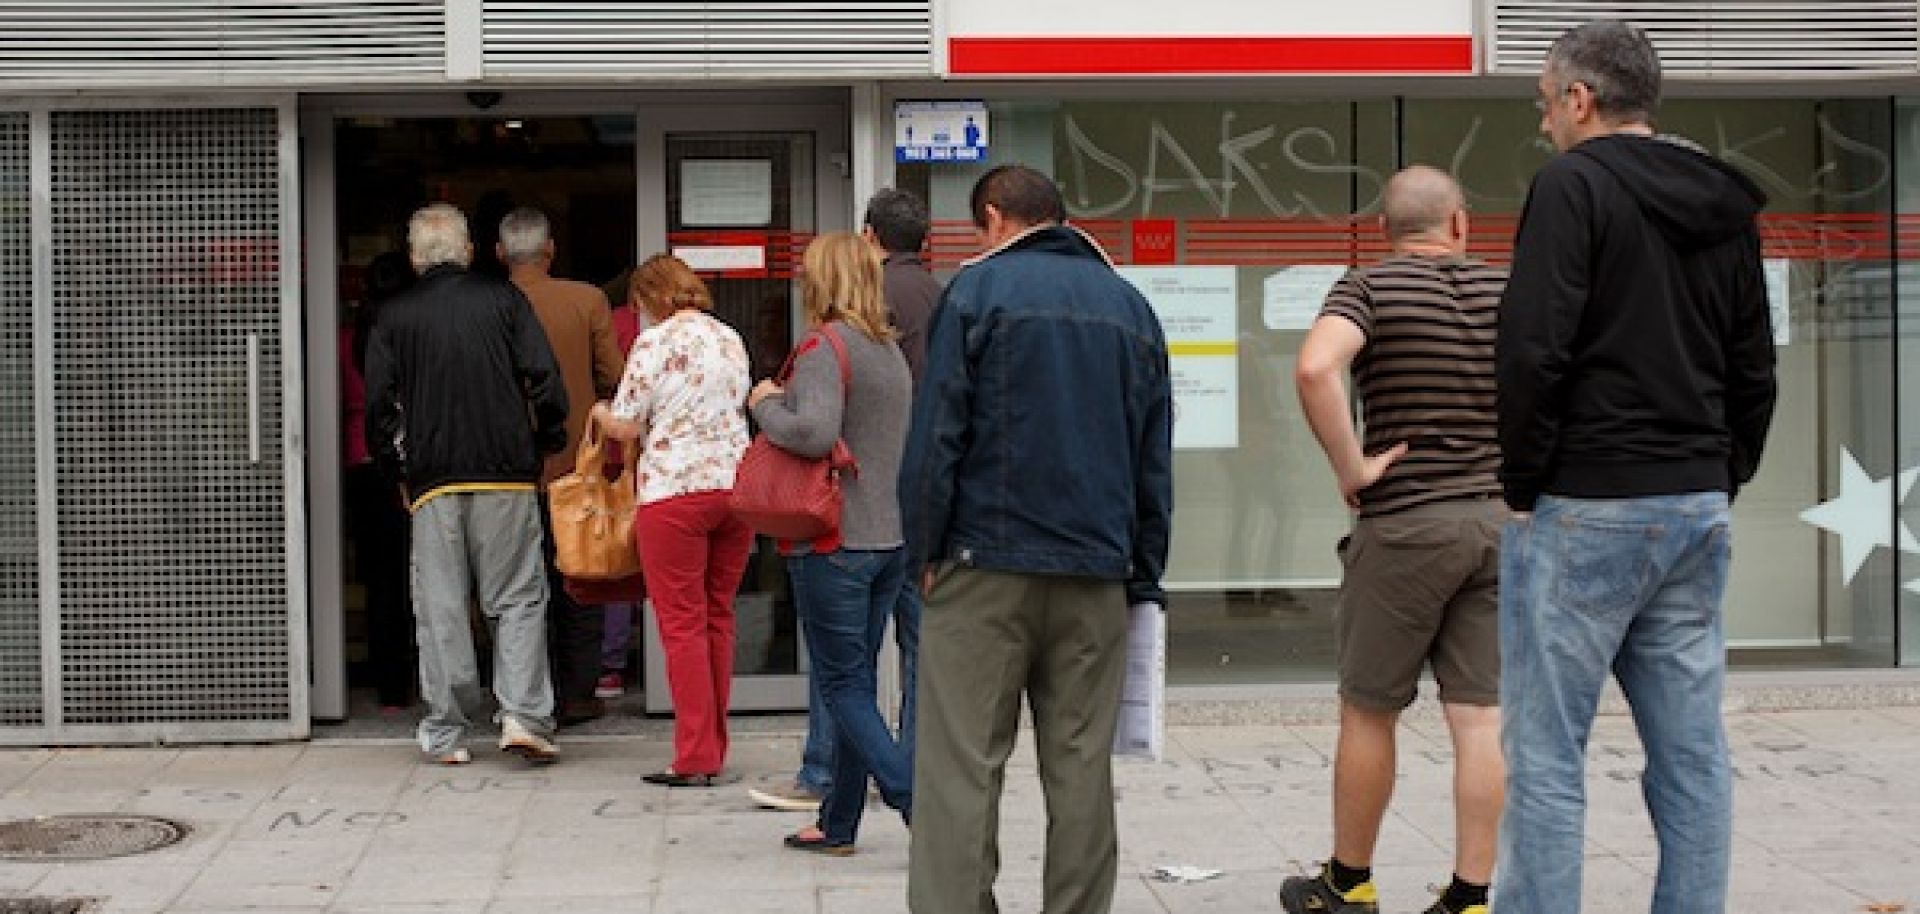 Unemployment in Spain Persists Despite Positive Indicators